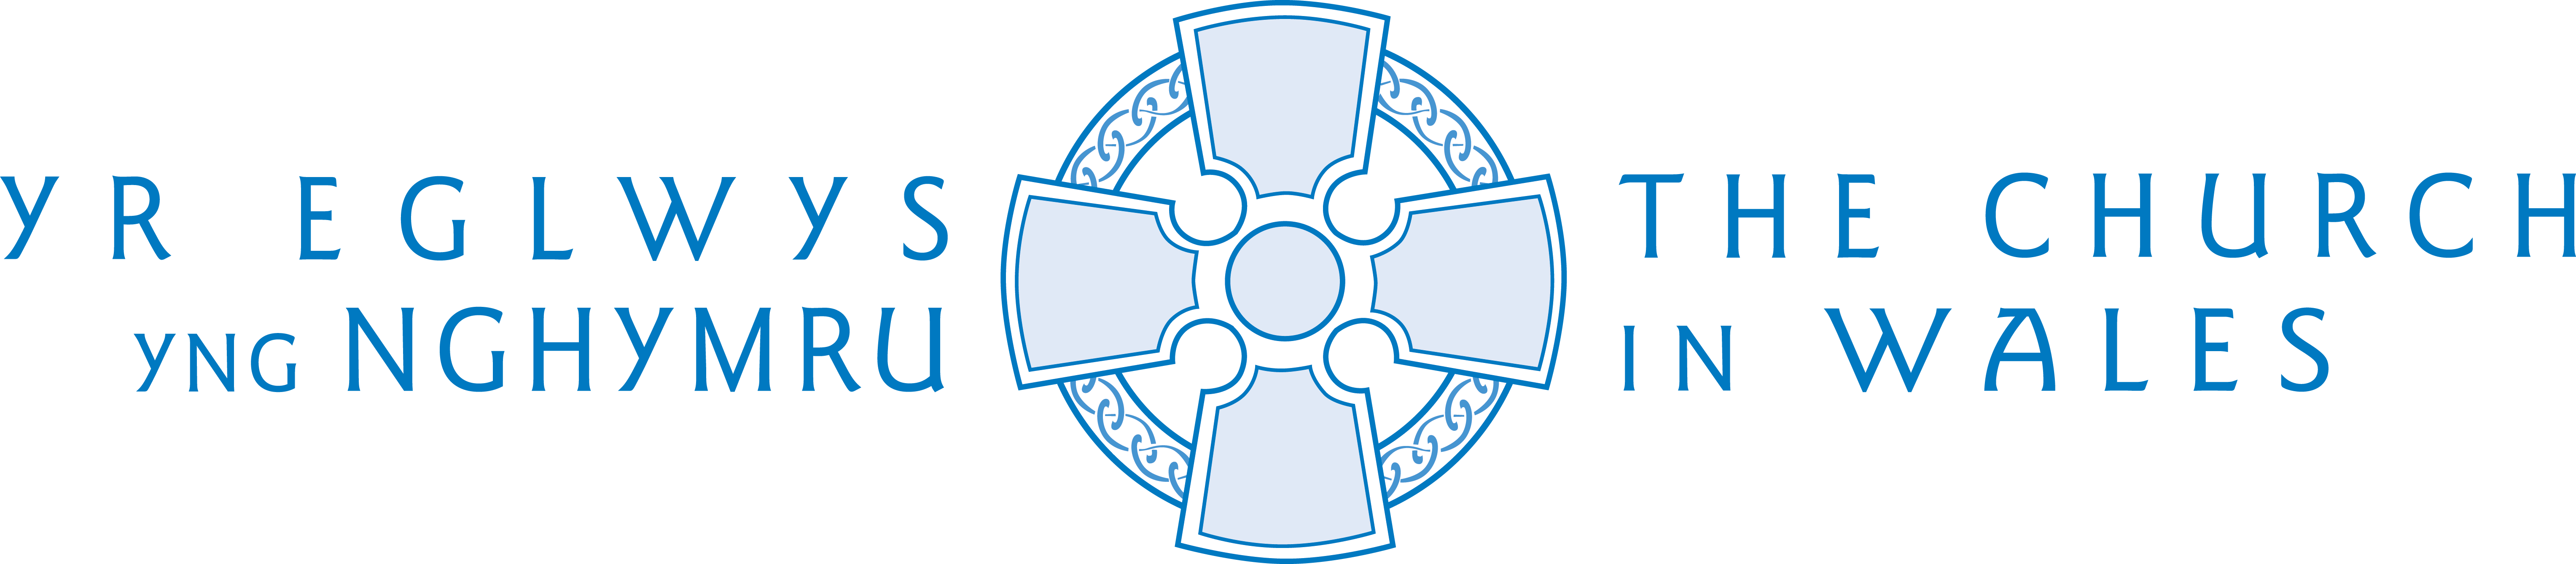 Church in Wales Logo